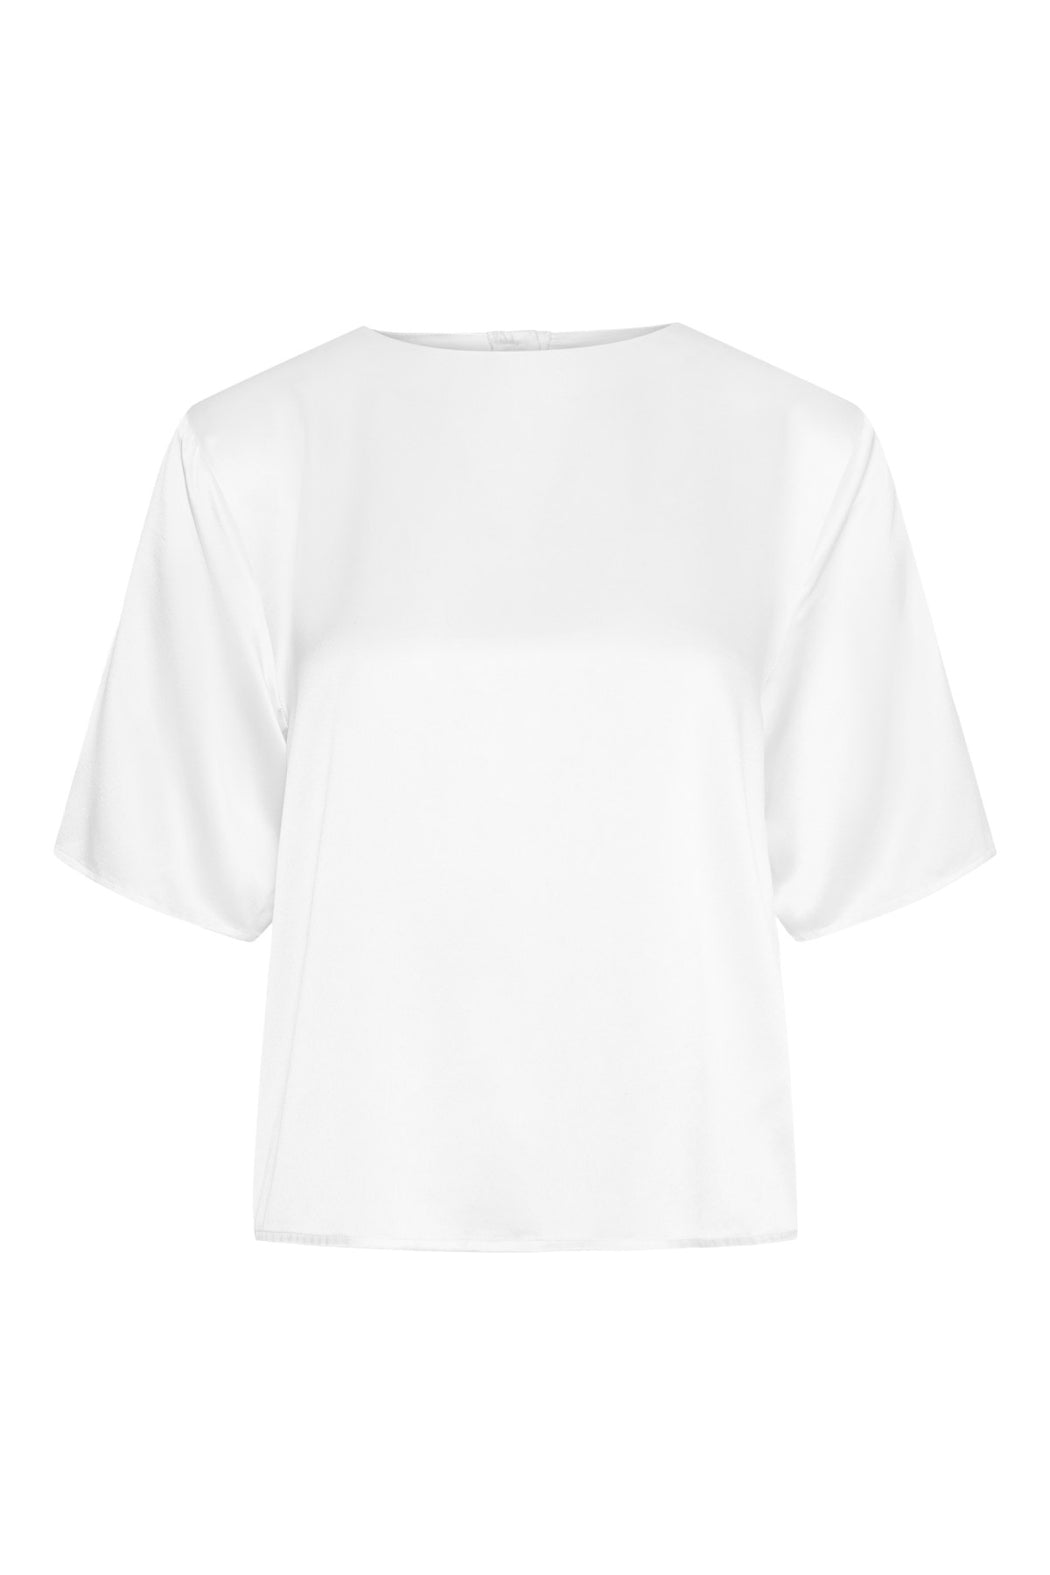 Envelope1976 Evolve T-shirt - Silk T-shirt White